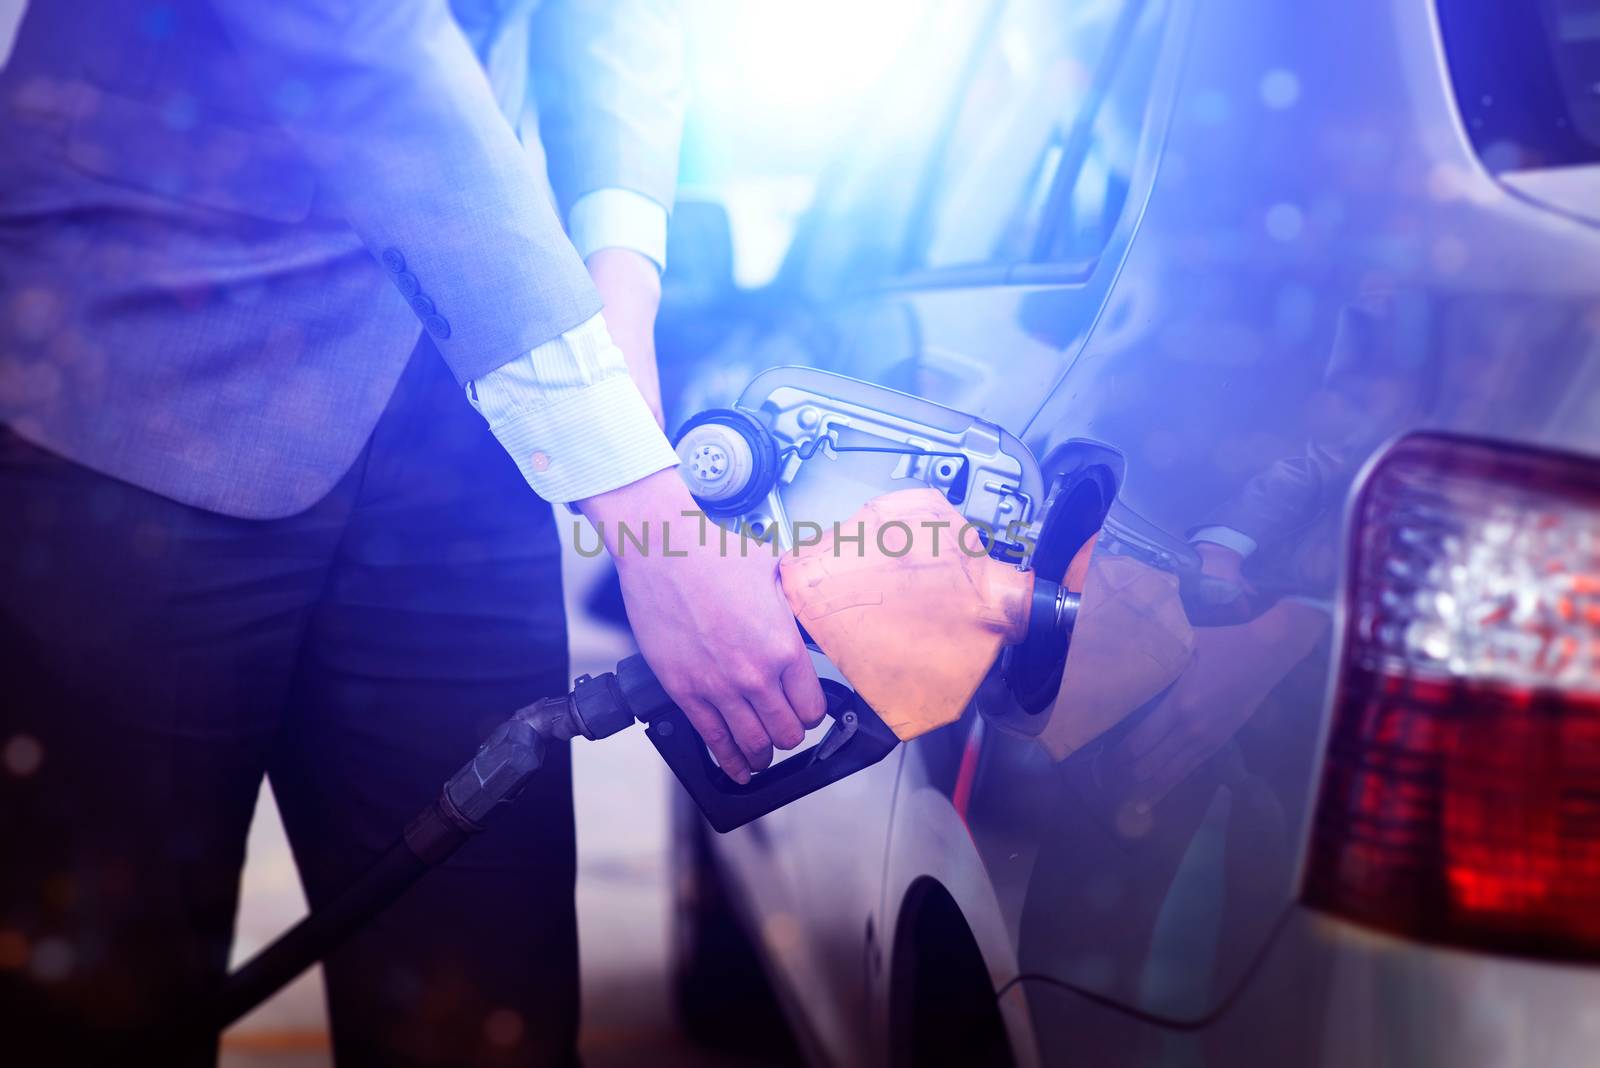 Pumping car petrol by szefei